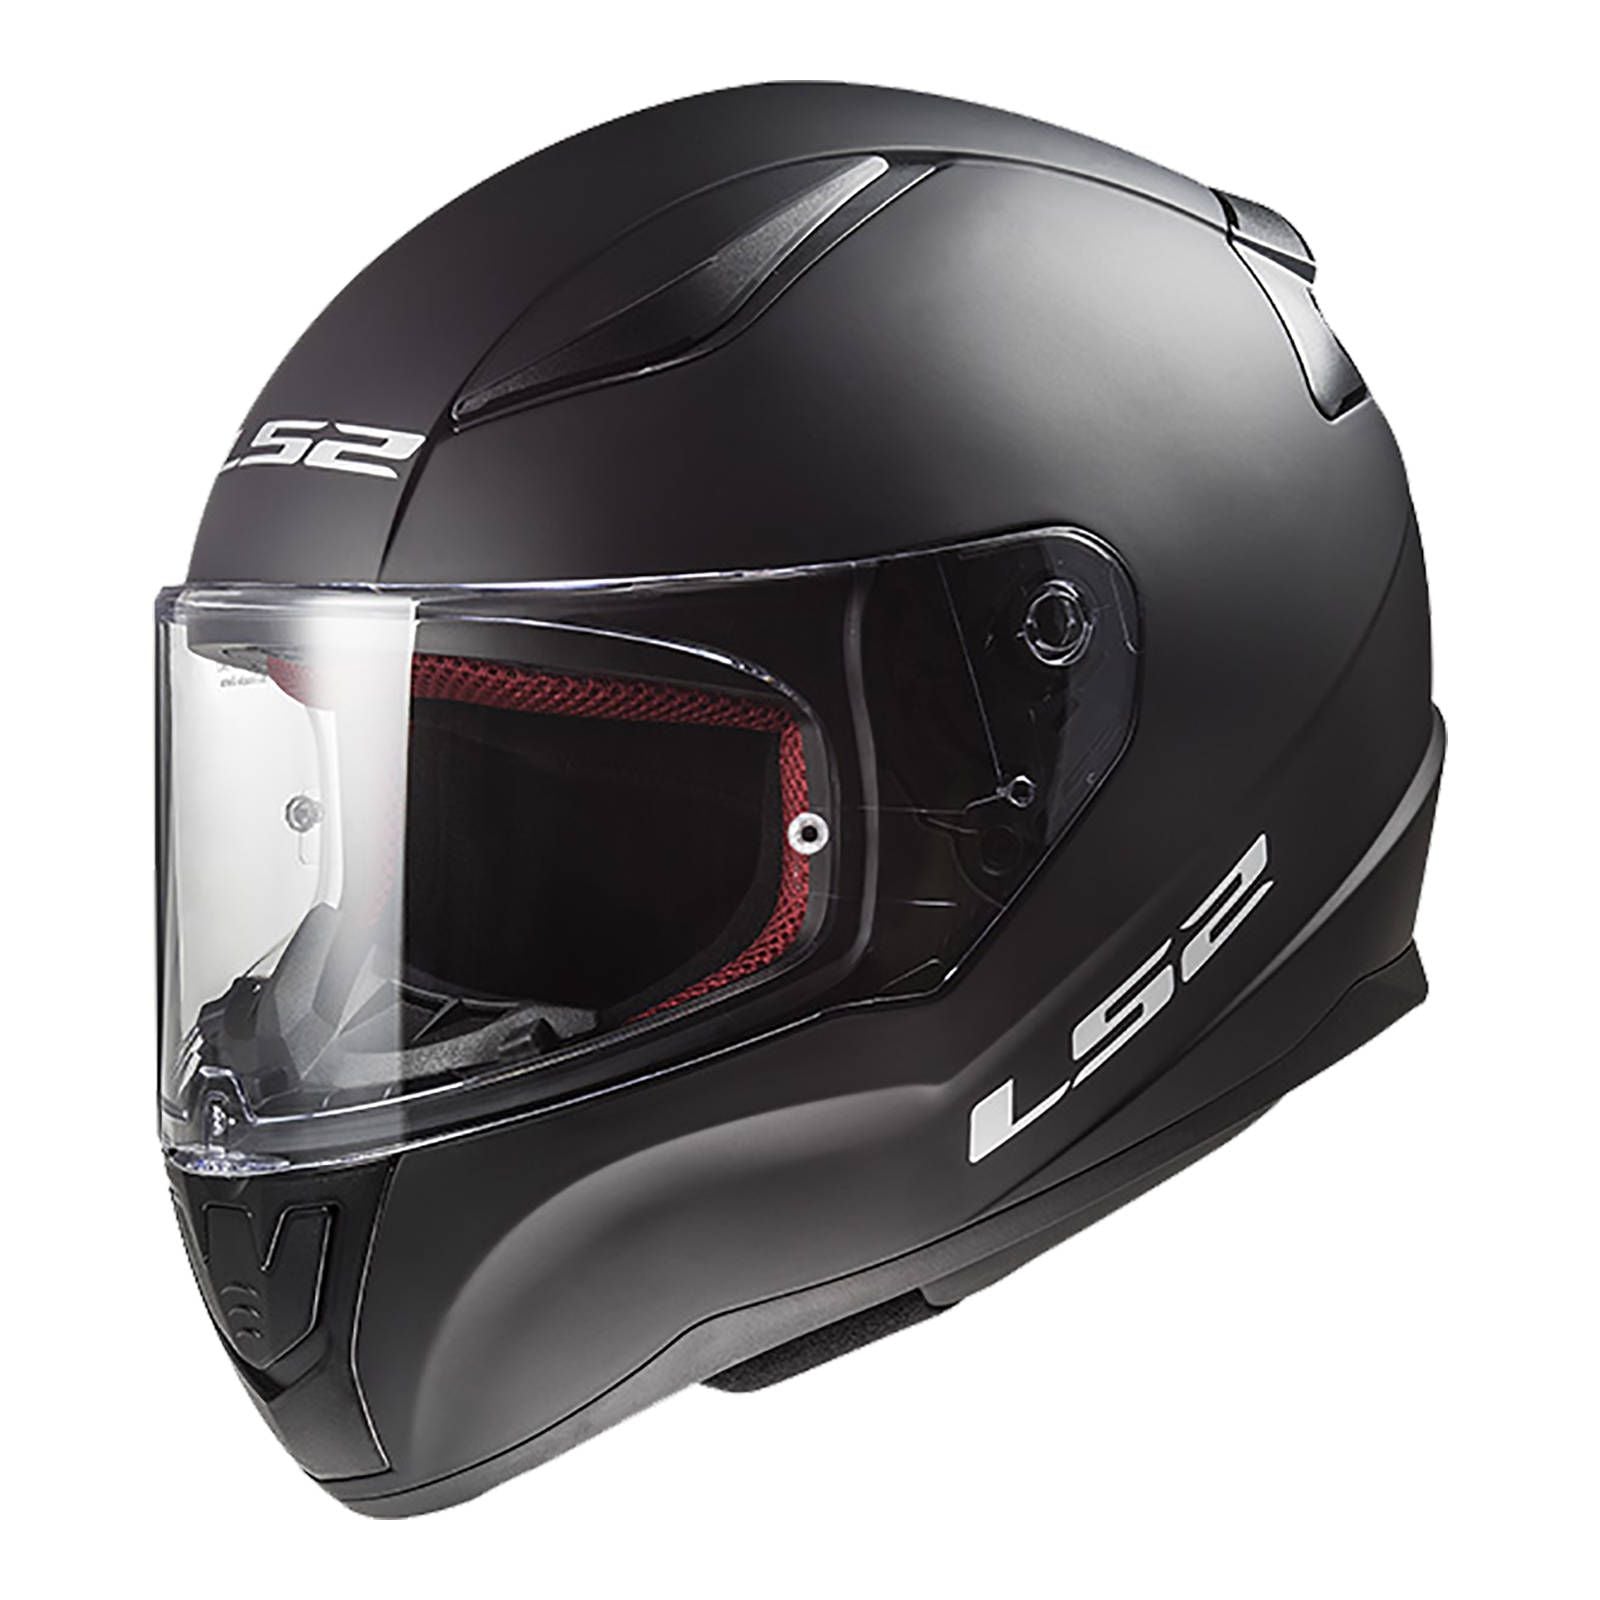 New LS2 FF353 Rapid Helmet - Matte Black (2XL) #LS2FF353MB2XL